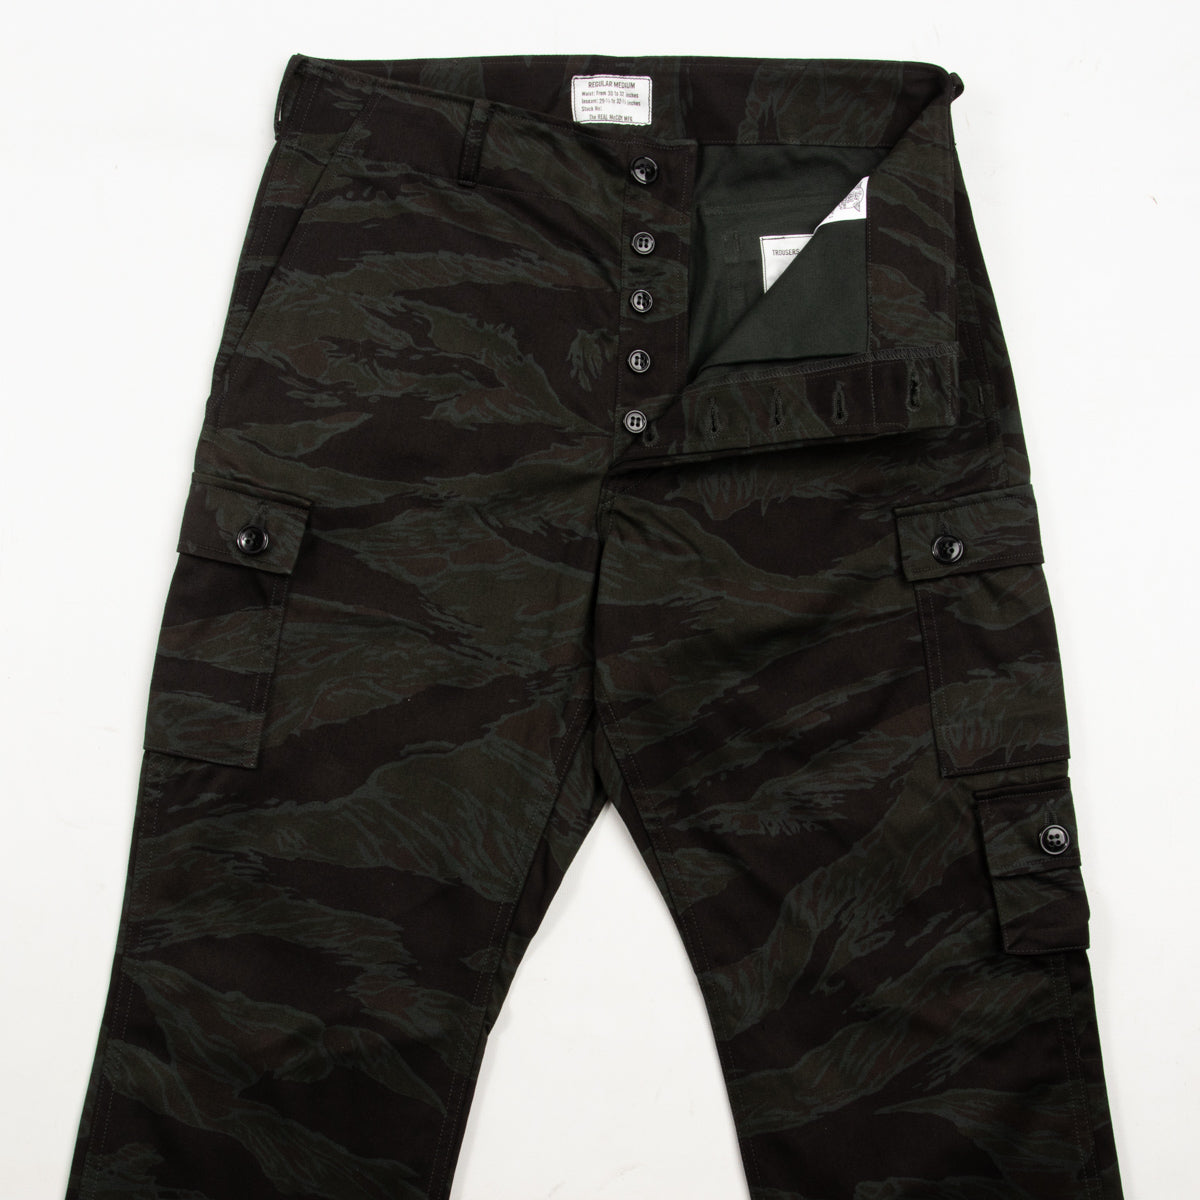 Tactical Pants  Cargo Trousers  Hiking Pants  Tactical Pants Men Black  Camouflage  Aliexpress